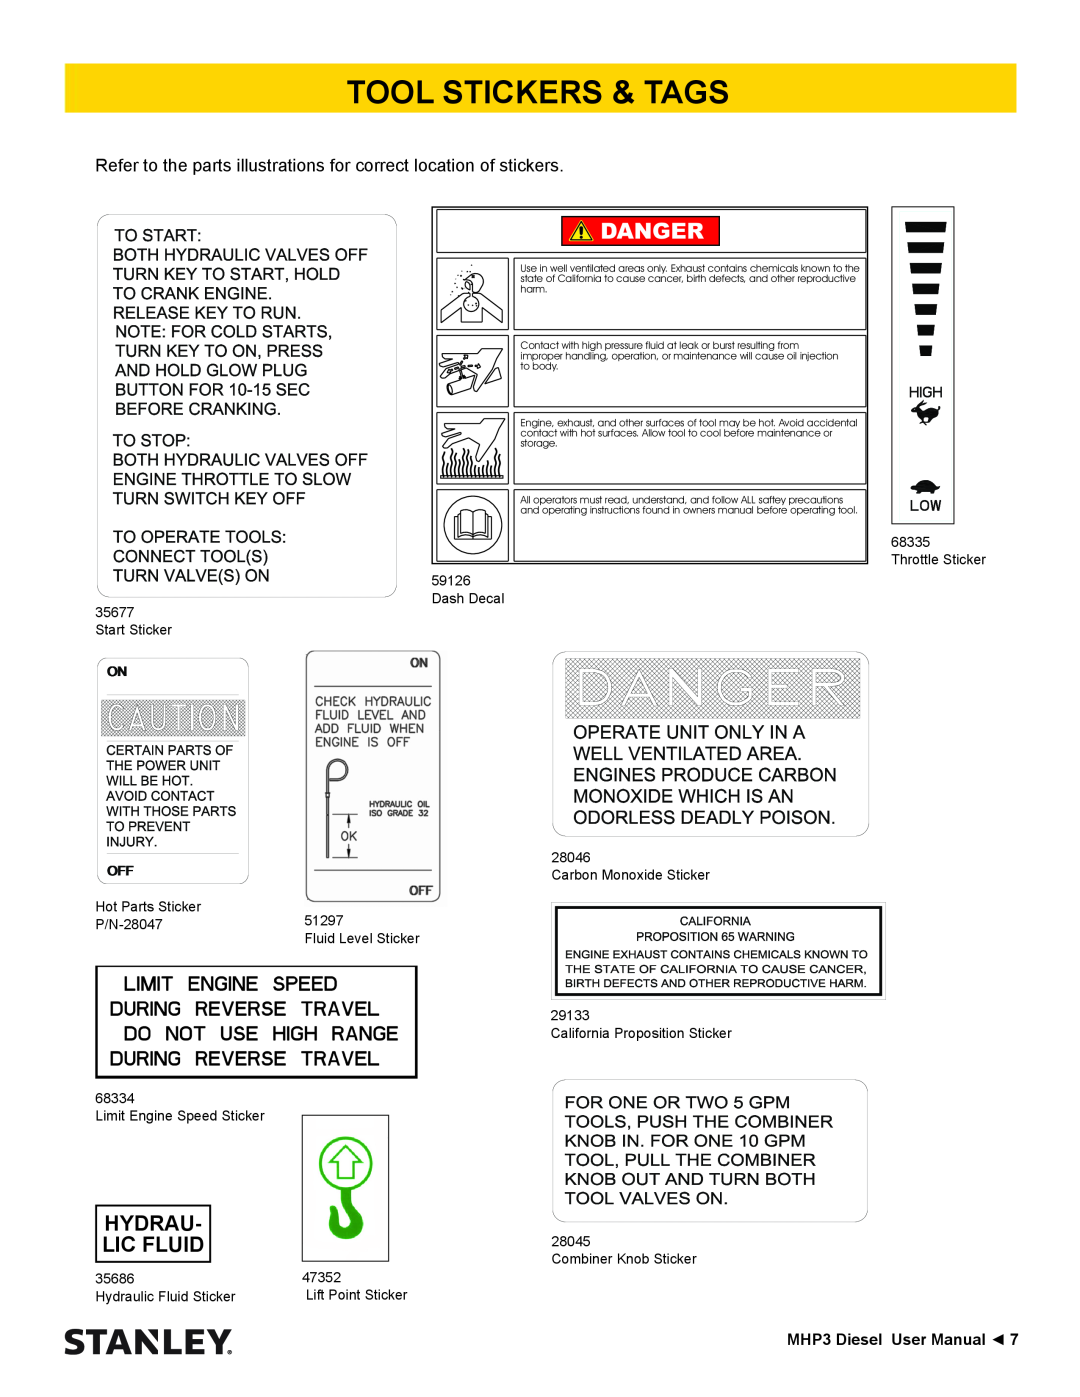 Stanley Black & Decker MHP3 manual Tool Stickers & Tags, Hydrau, Lic Fluid 